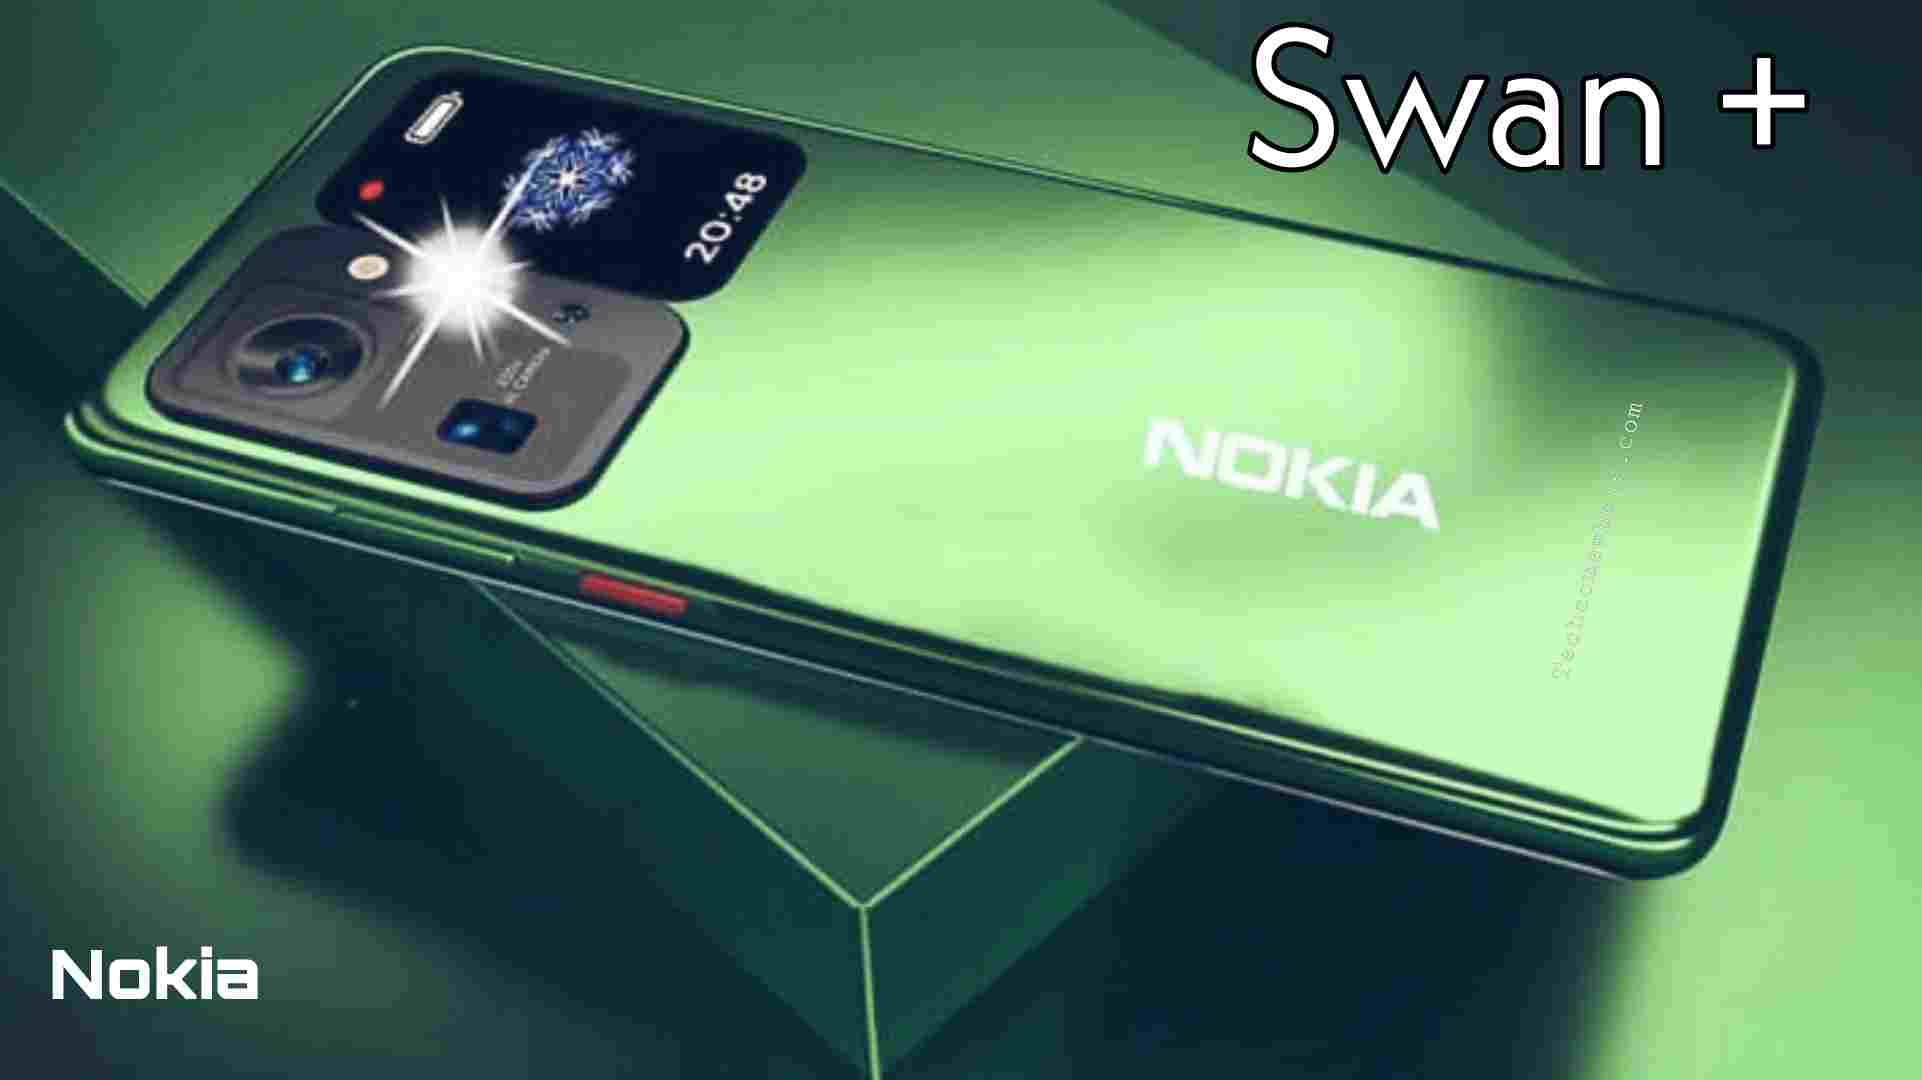 Nokia Swan Plus 2022 Release Date, Price, Rumours & Full Specification